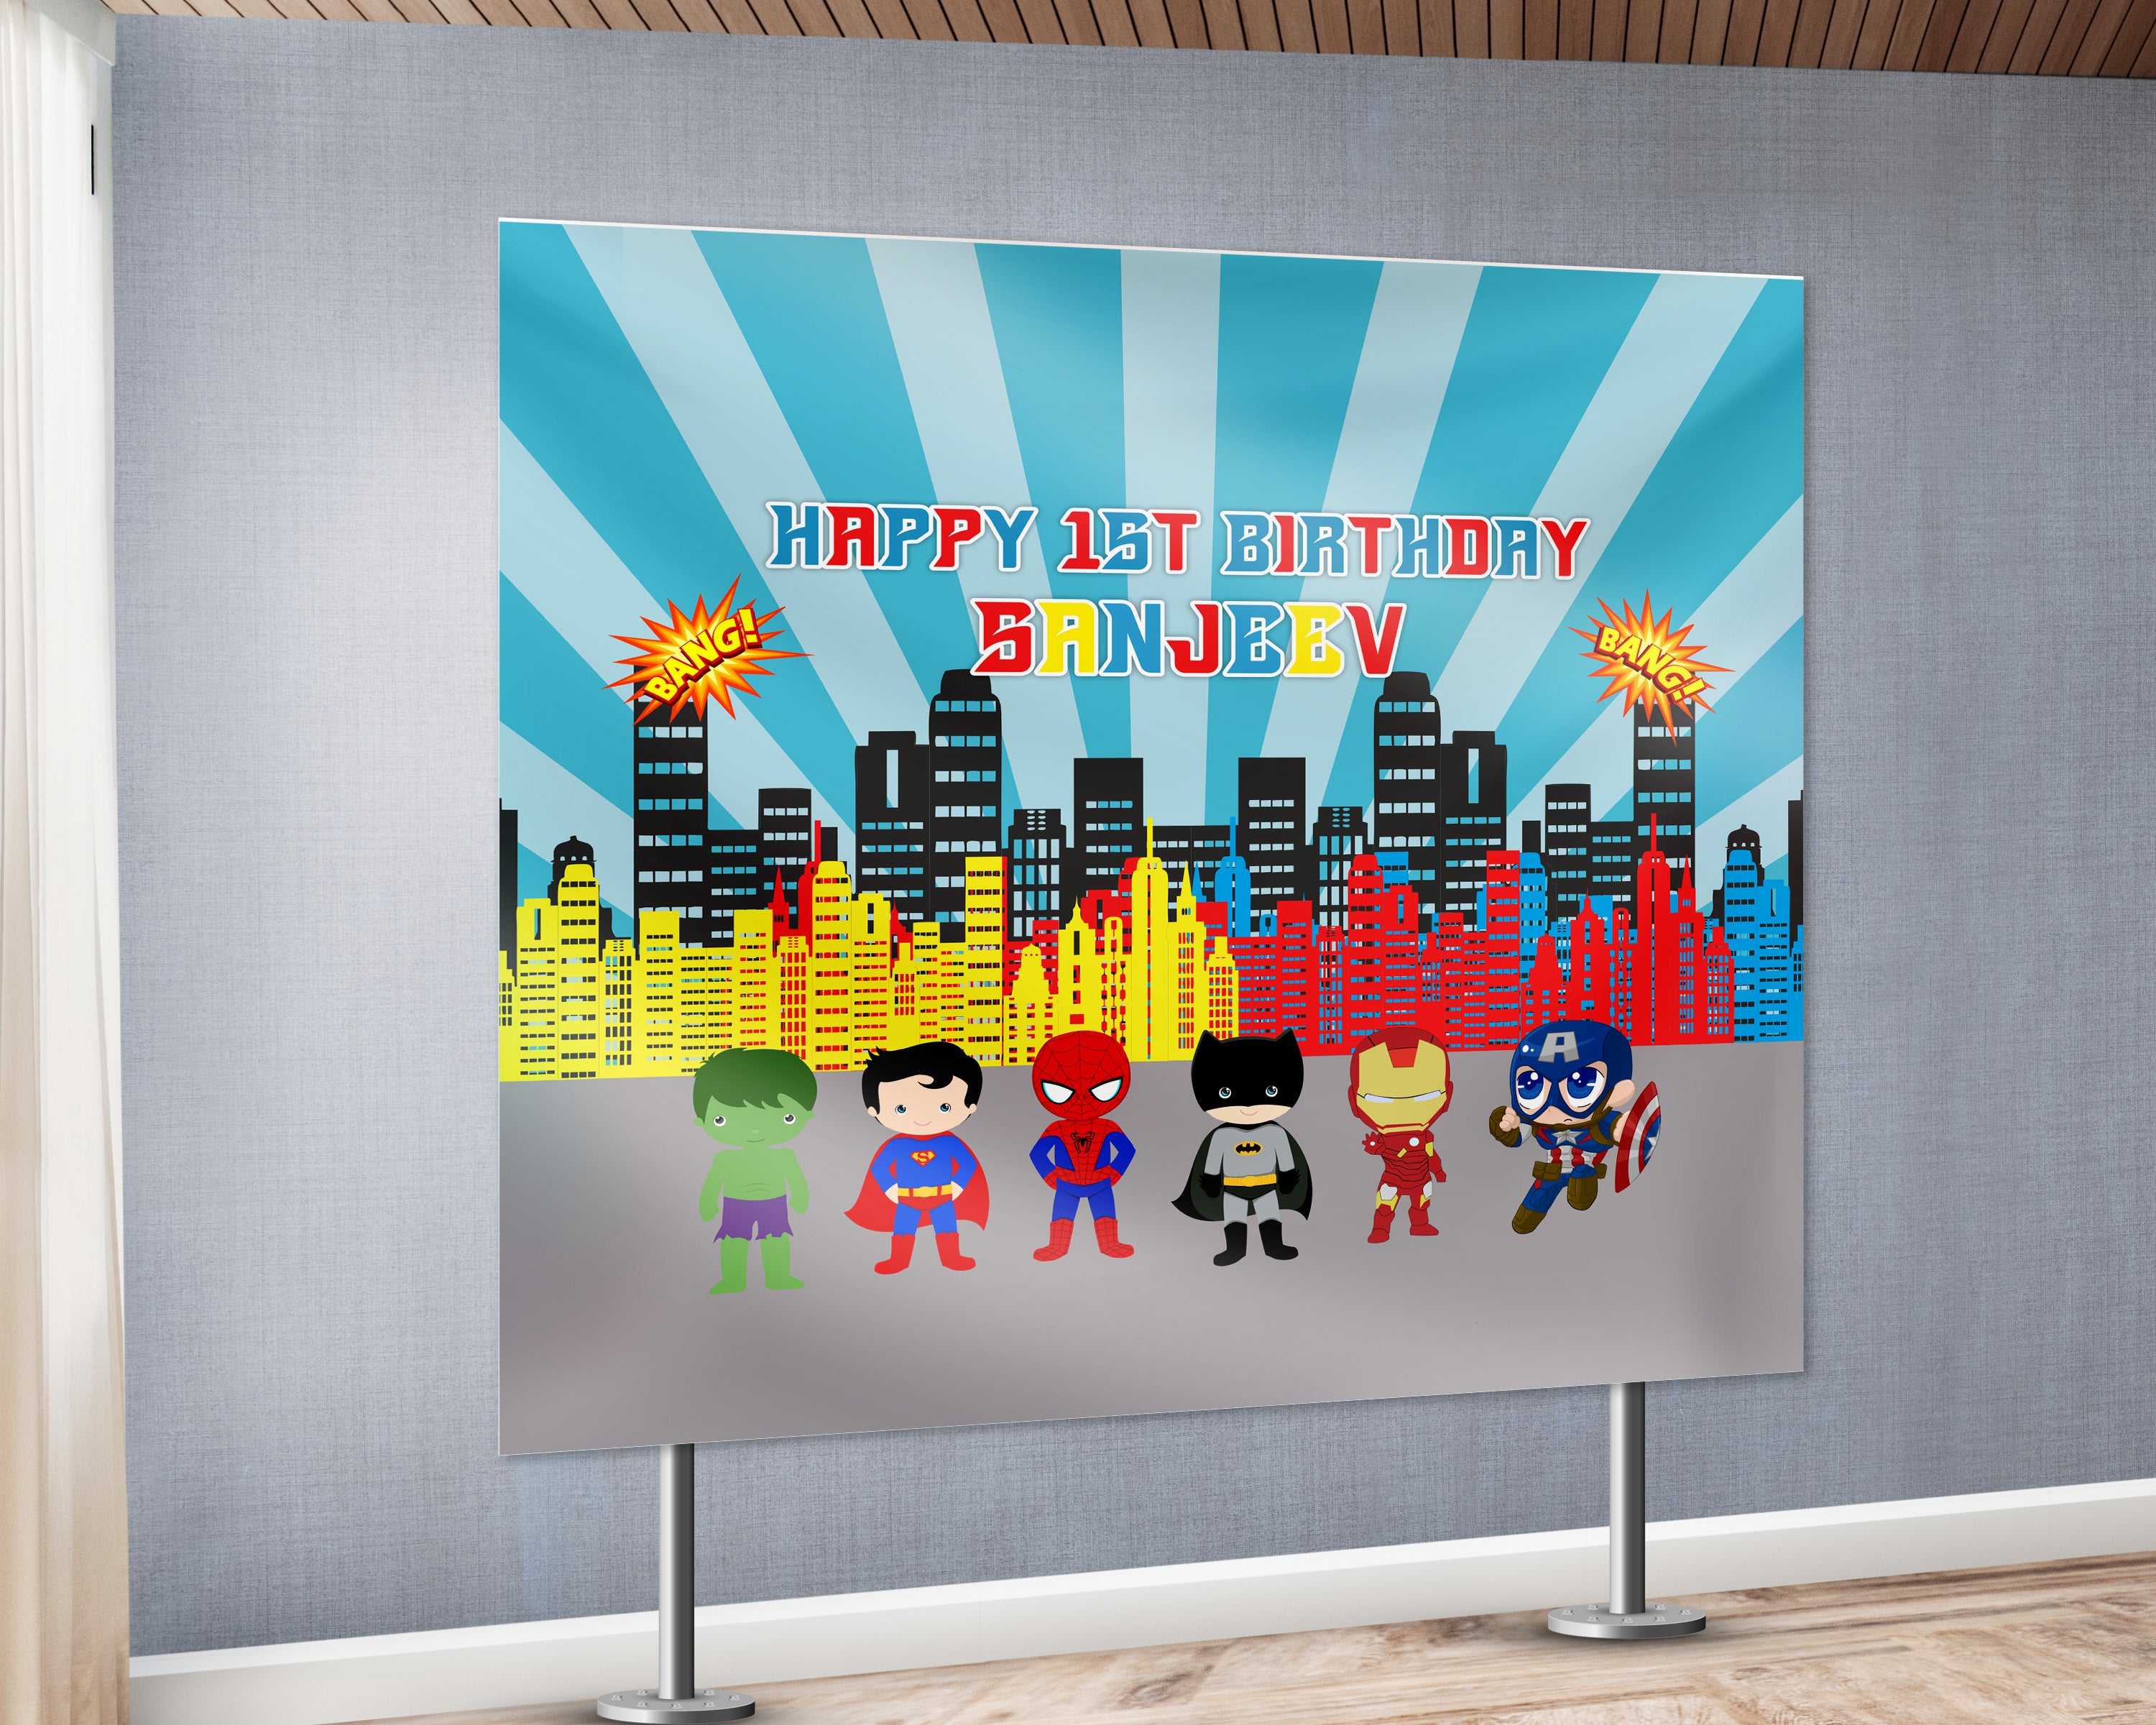 PSI Avengers Theme Personalized  Square Backdrop